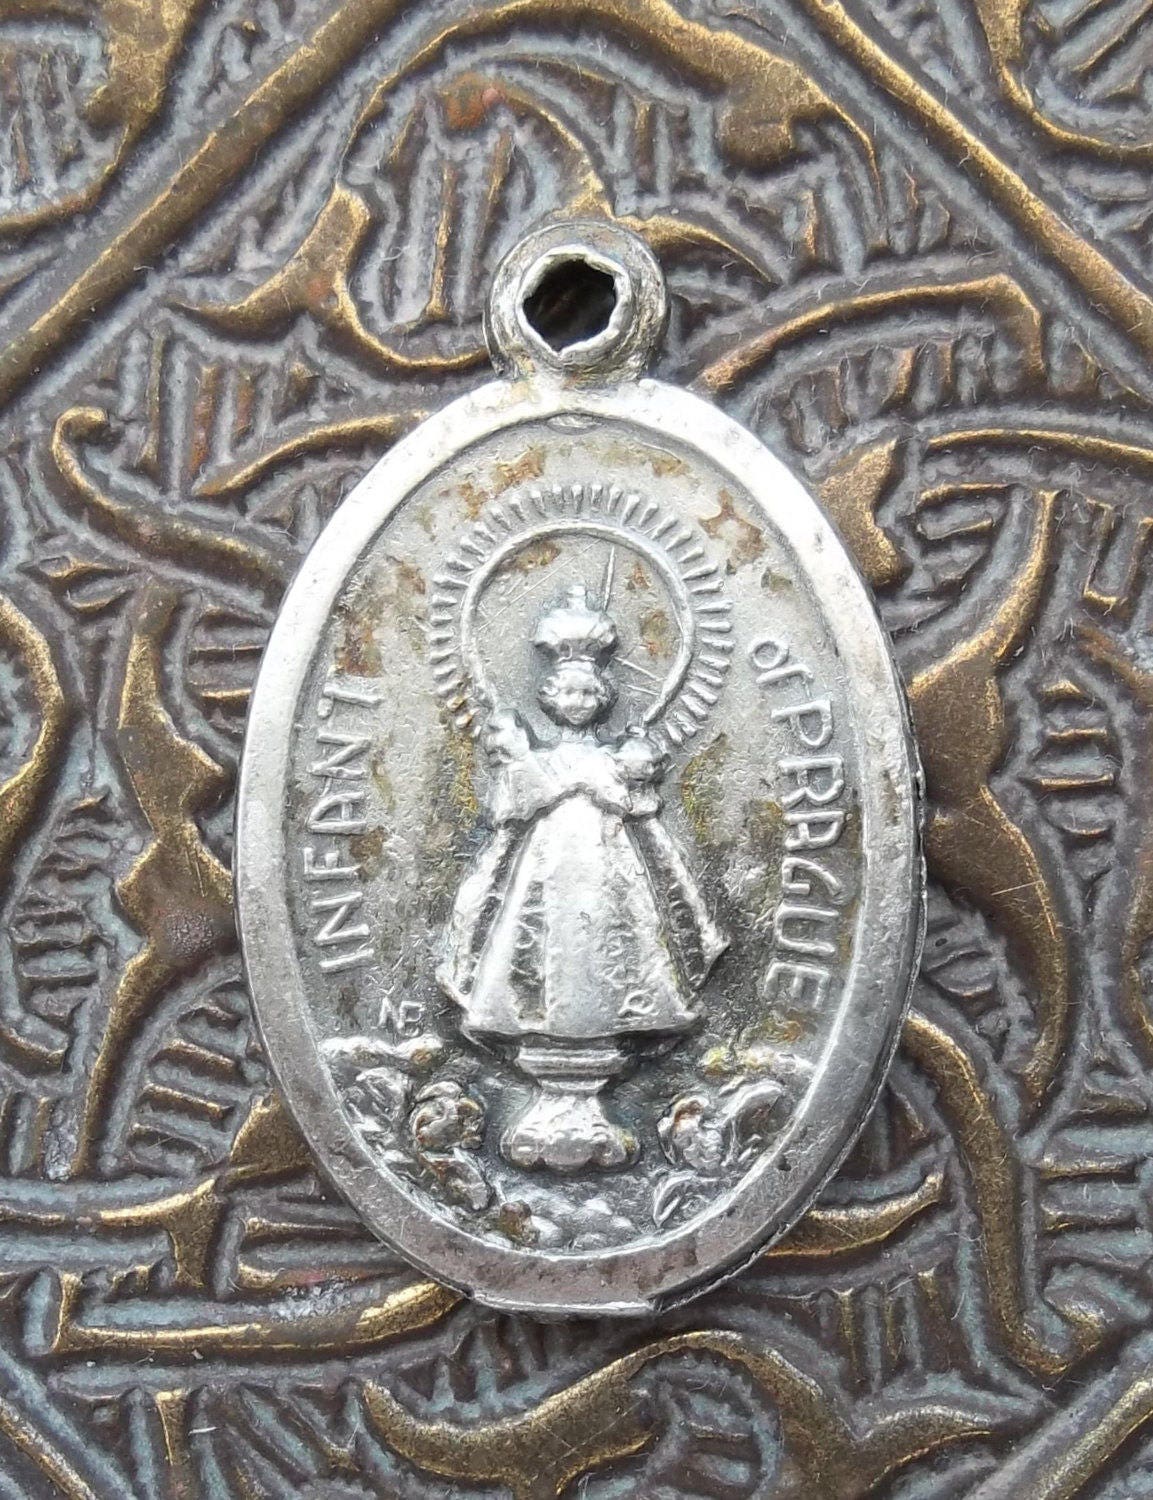 Royal Blue Enamel Italian Catholic Silver Miraculous Medal of the